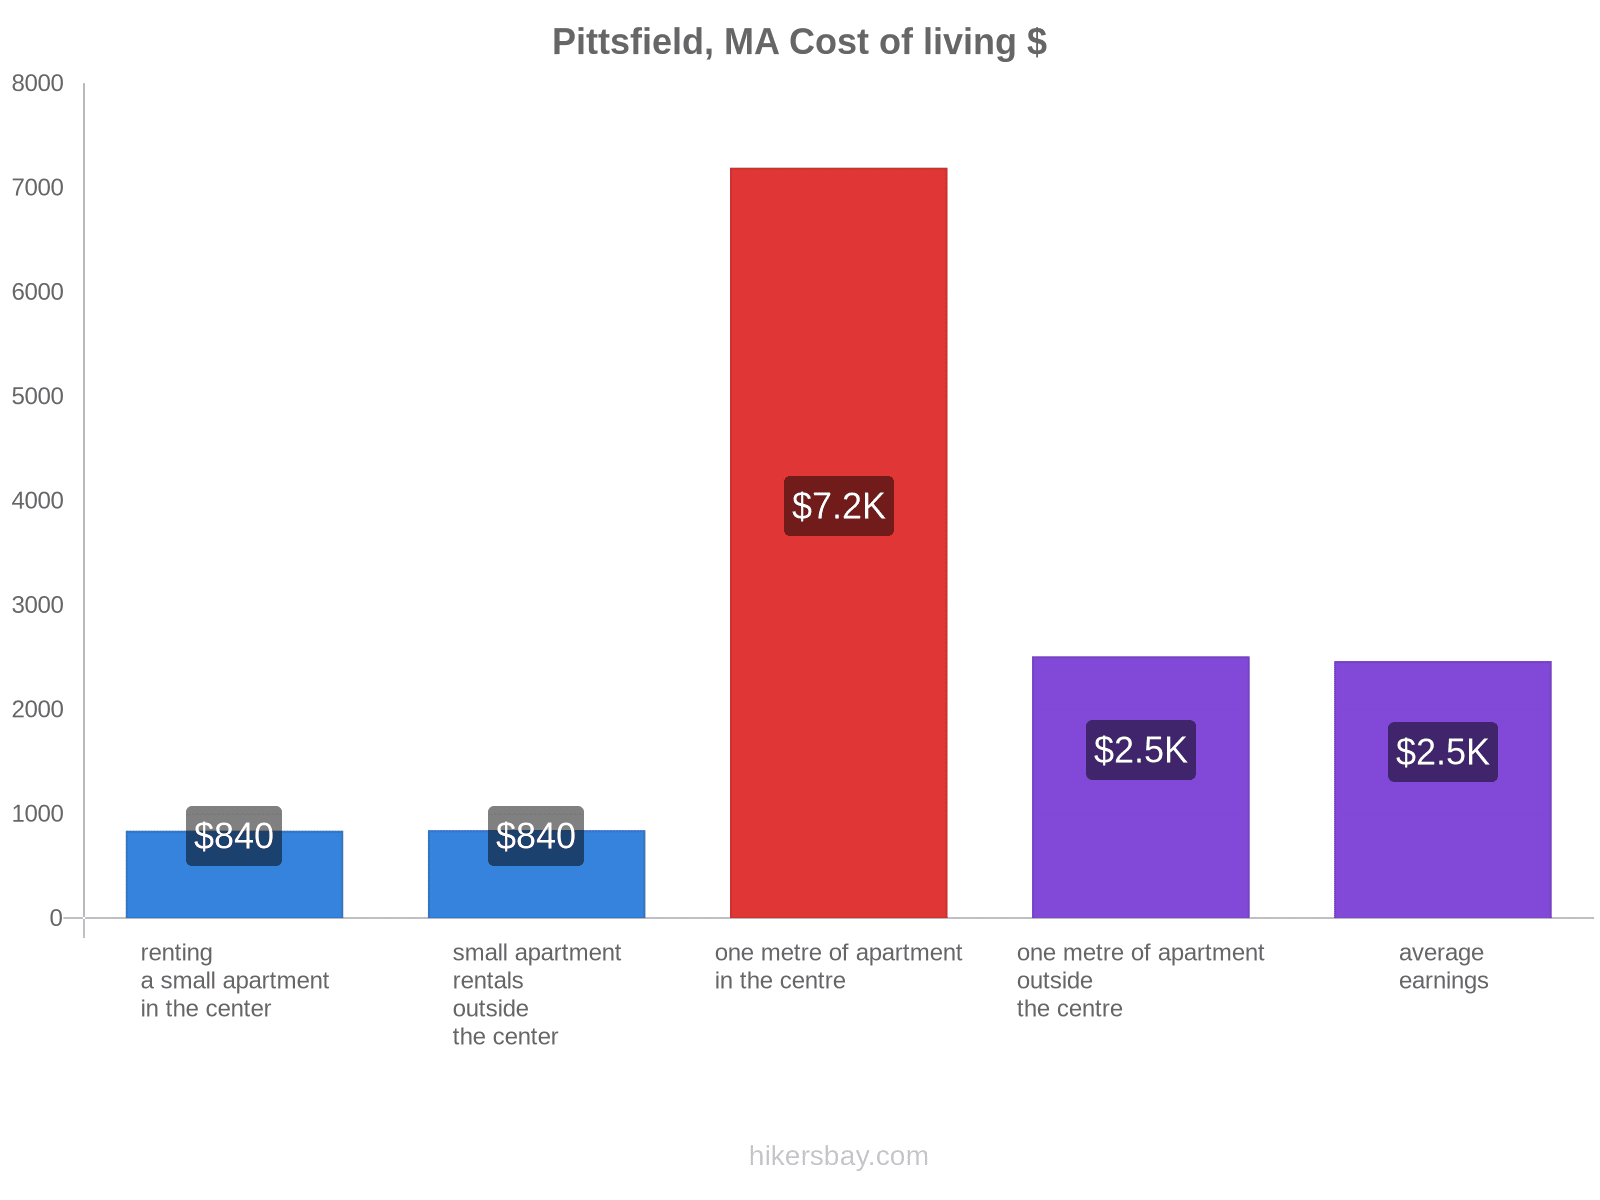 Pittsfield, MA cost of living hikersbay.com